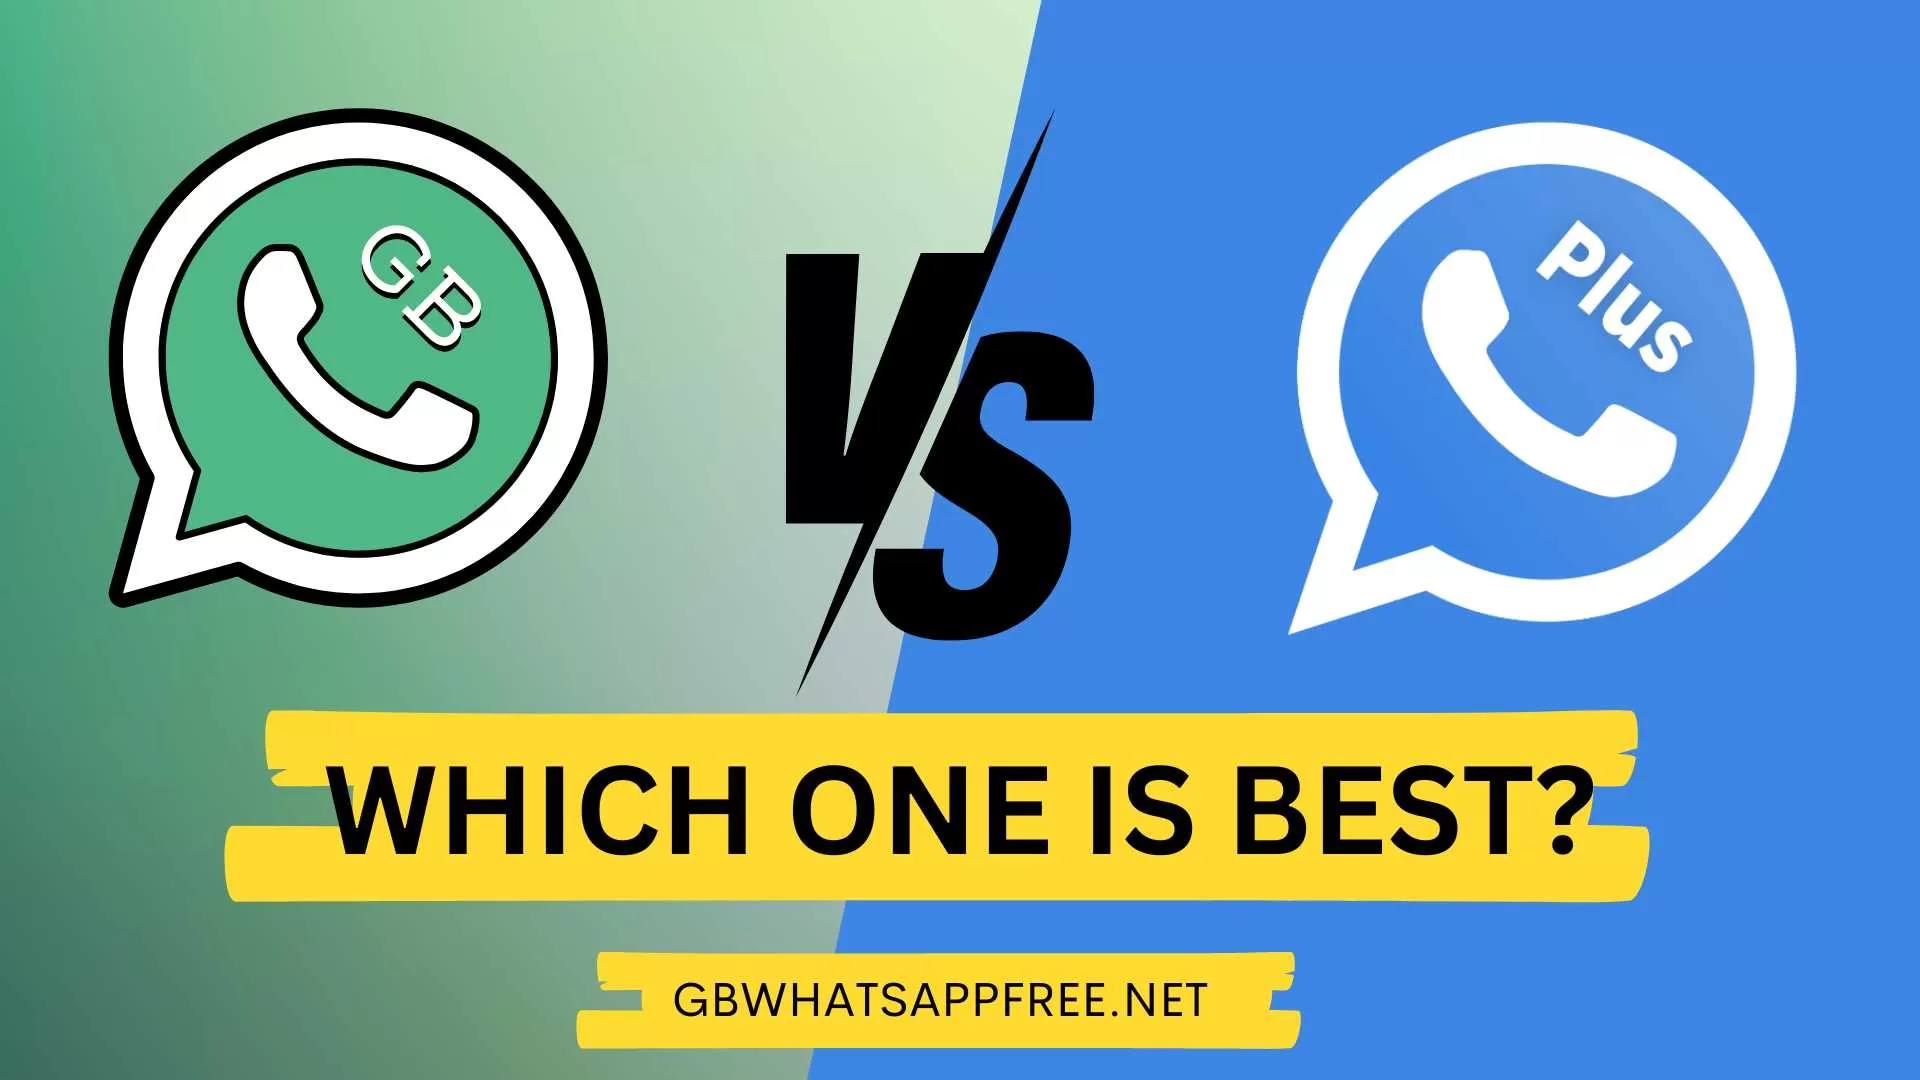 GB WhatsApp And WhatsApp Plus comparison